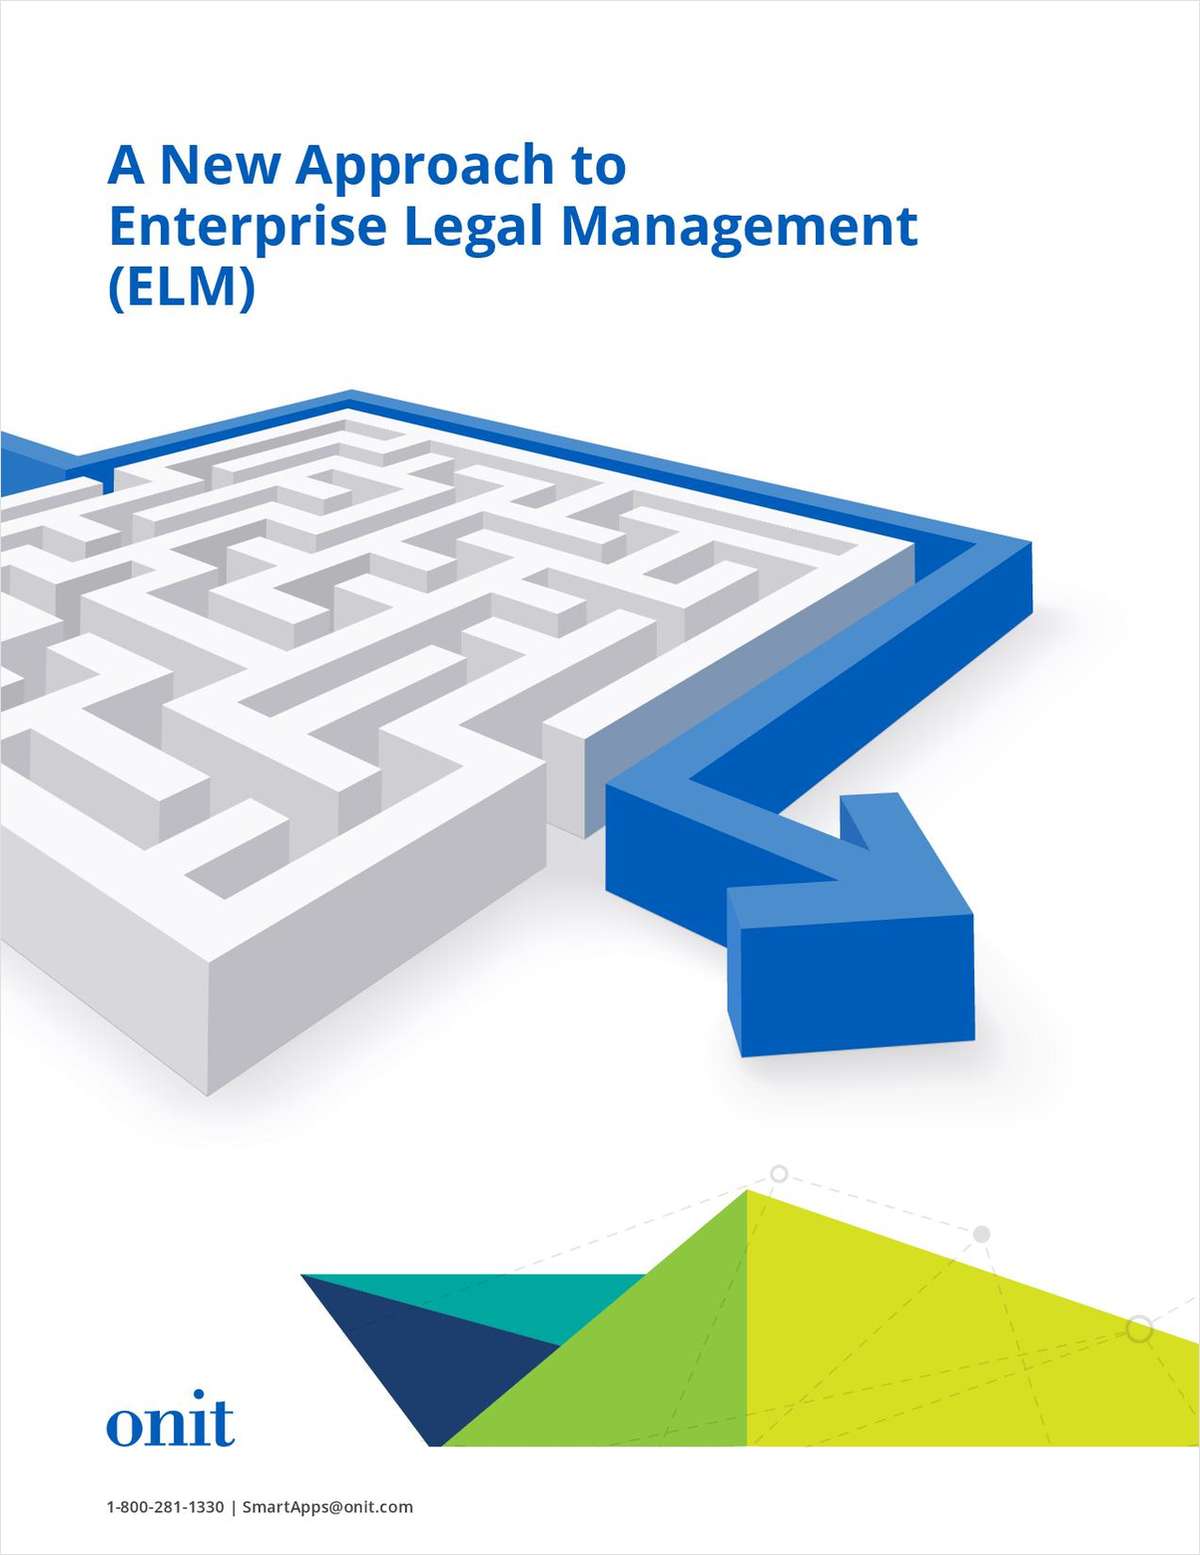 A New Approach to Enterprise Legal Management